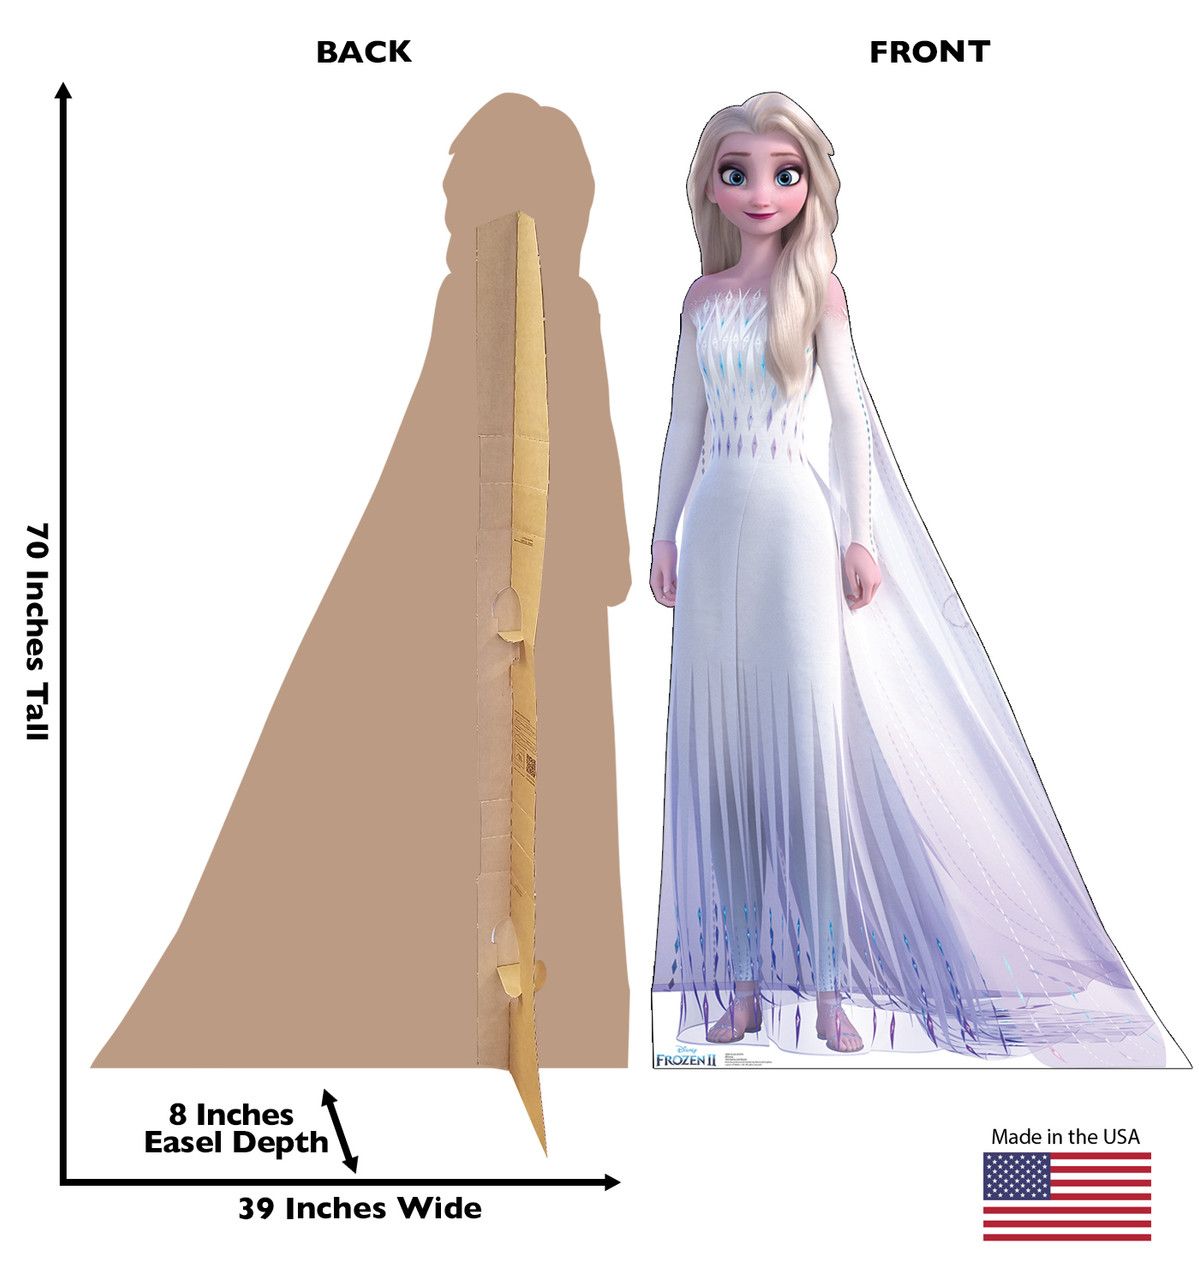 Life-Size Cardboard Cutout of Elsa Frozen 2